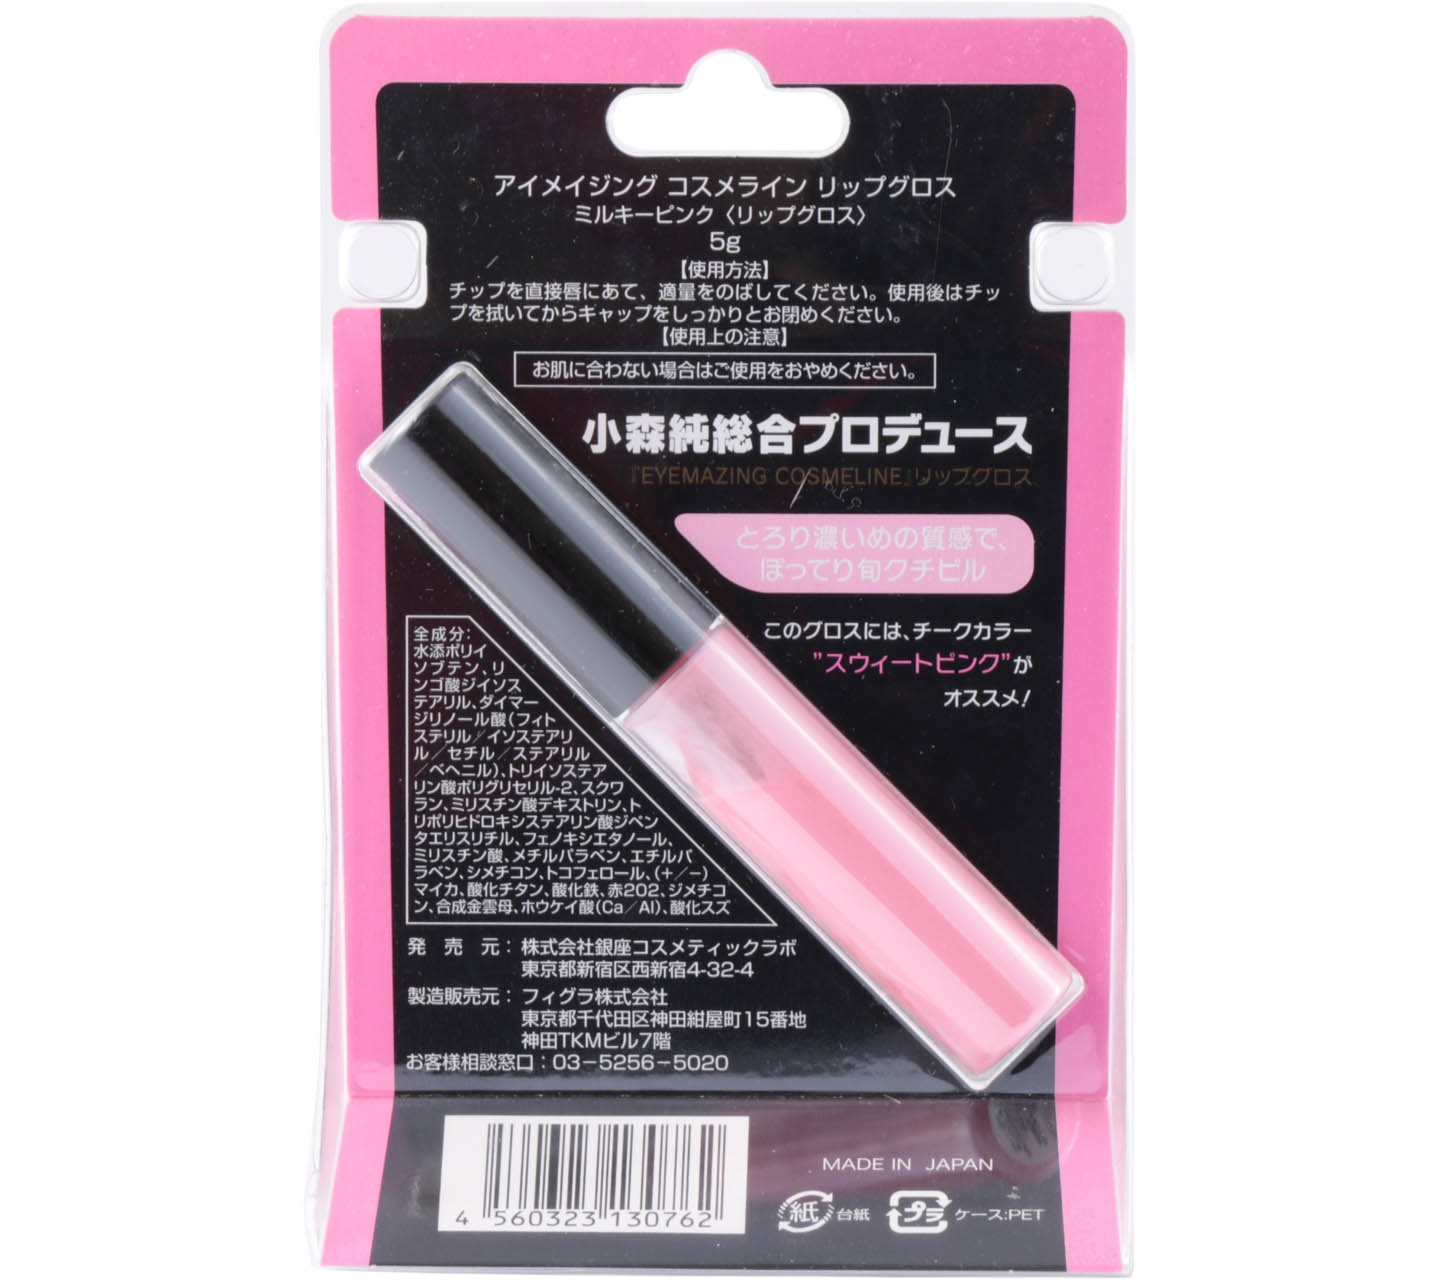 Eyemazing Cosmeline Pink Milky Gloss Lips